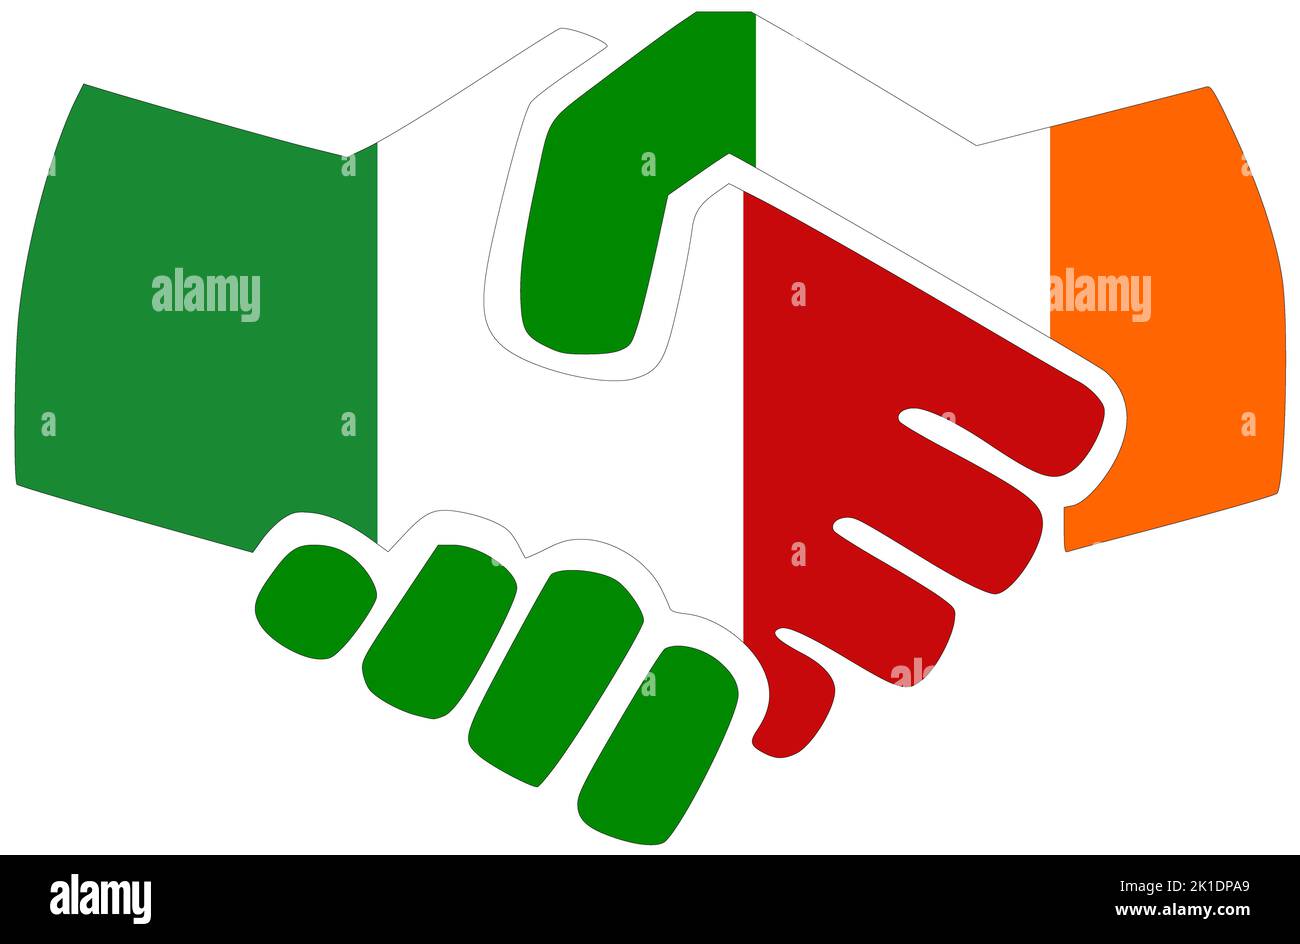 Italy - Ireland : Handshake, symbol of agreement or friendship Stock Photo